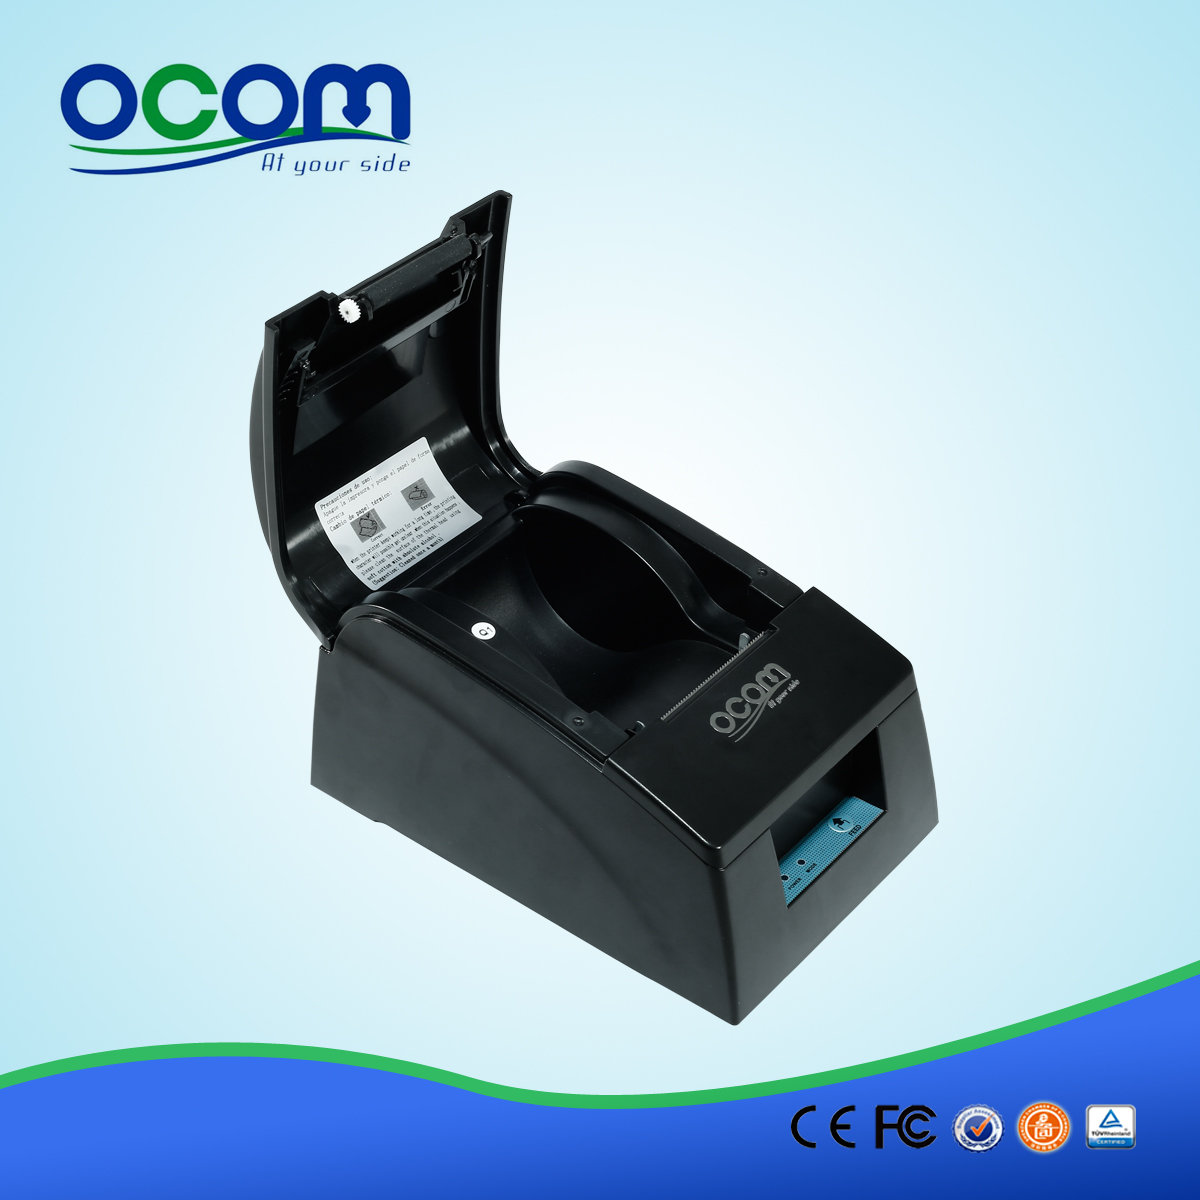 Chiny Pos Otrzymanie Thermal Printer OCPP-585